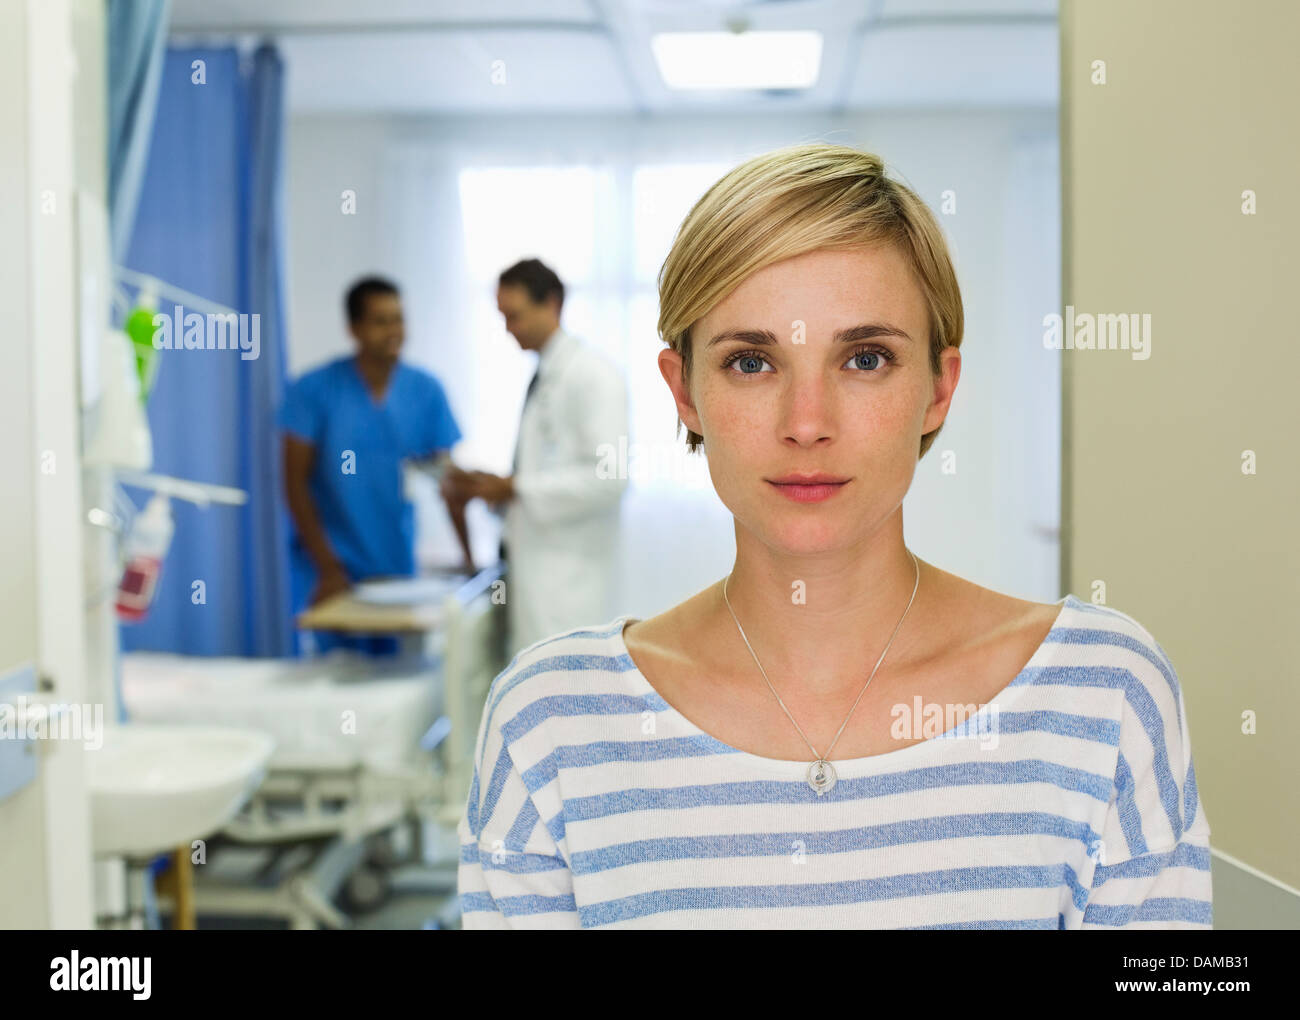 Patient standing in hospital room Stock Photo